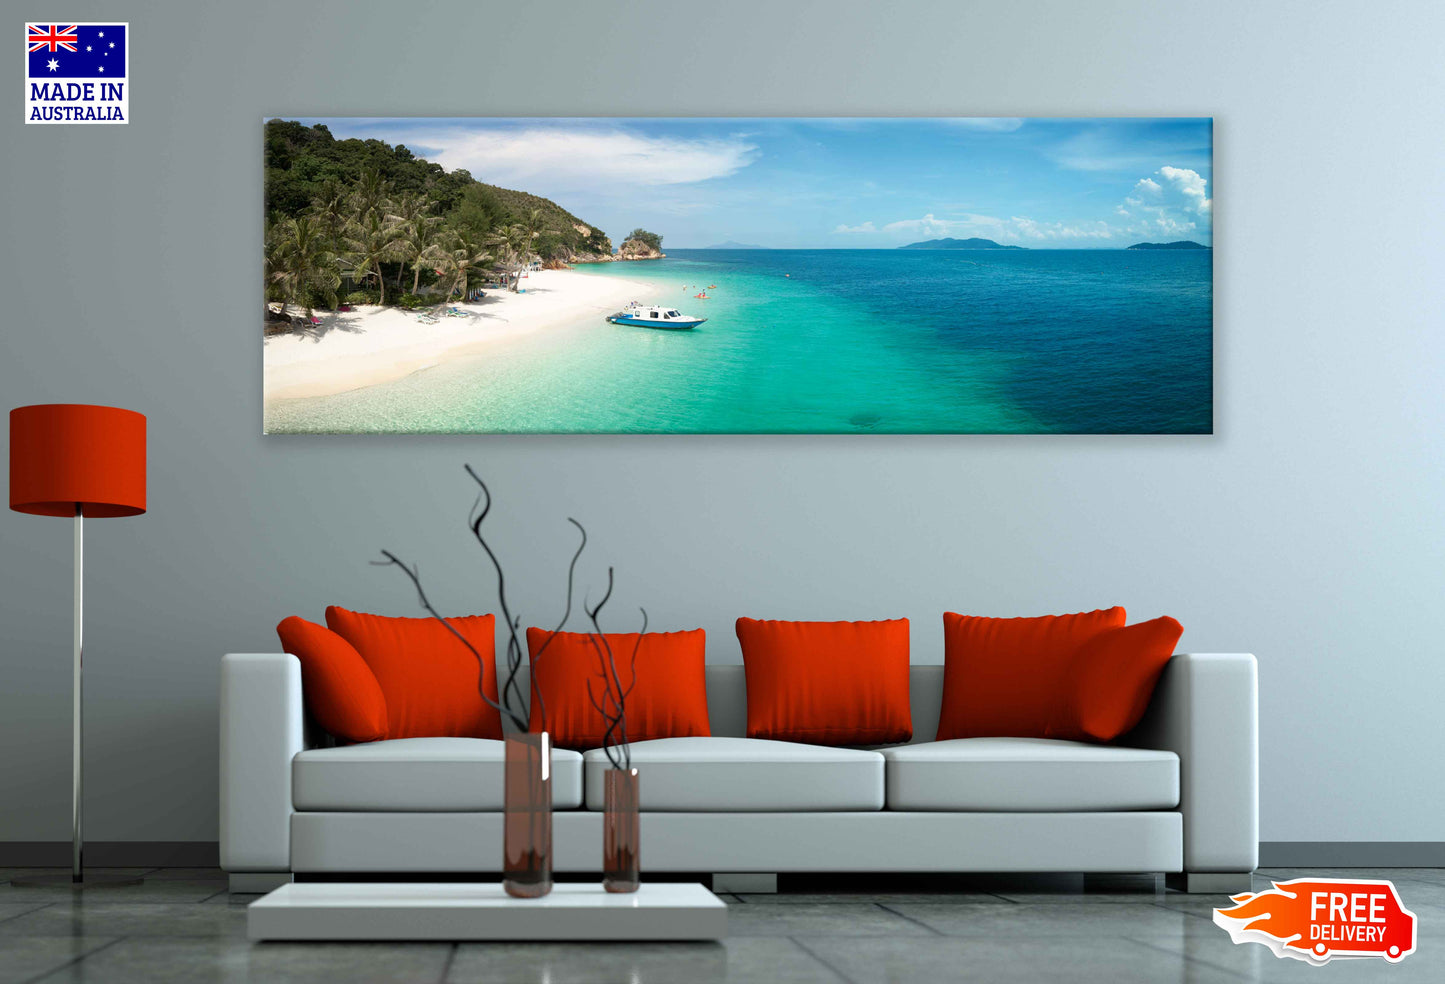 Panoramic Canvas Rawa Island Sand Sea View Photograph High Quality 100% Australian Made Wall Canvas Print Ready to Hang